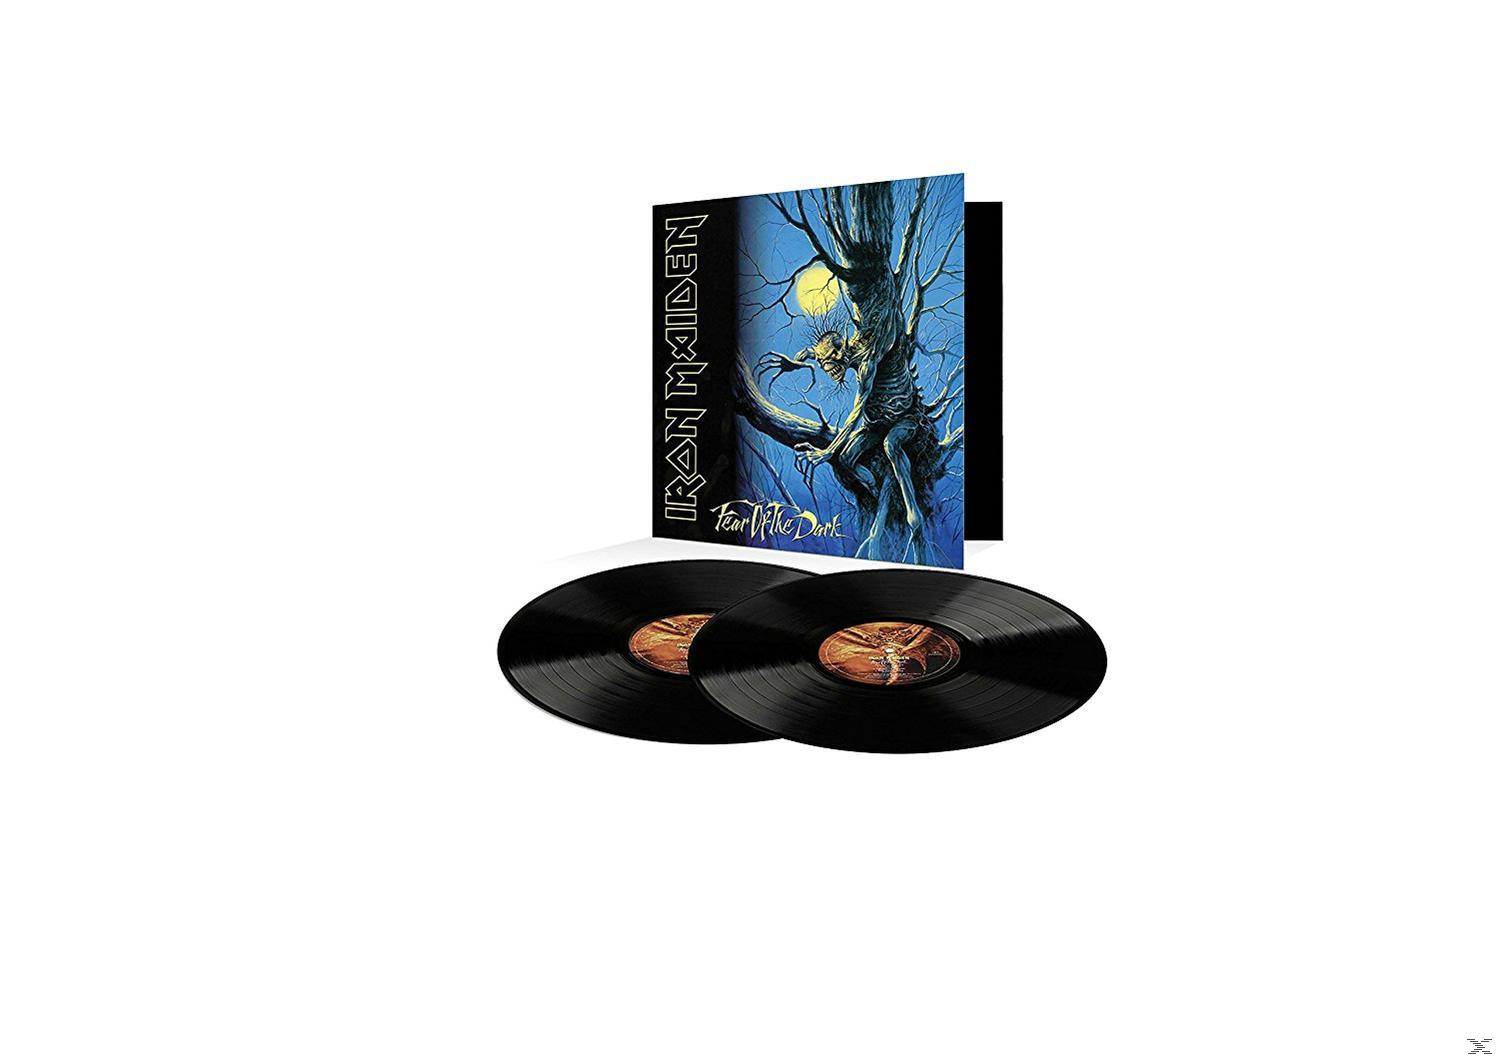 Iron Maiden - Fear of Remastered Version) (Vinyl) - The (2015 Dark